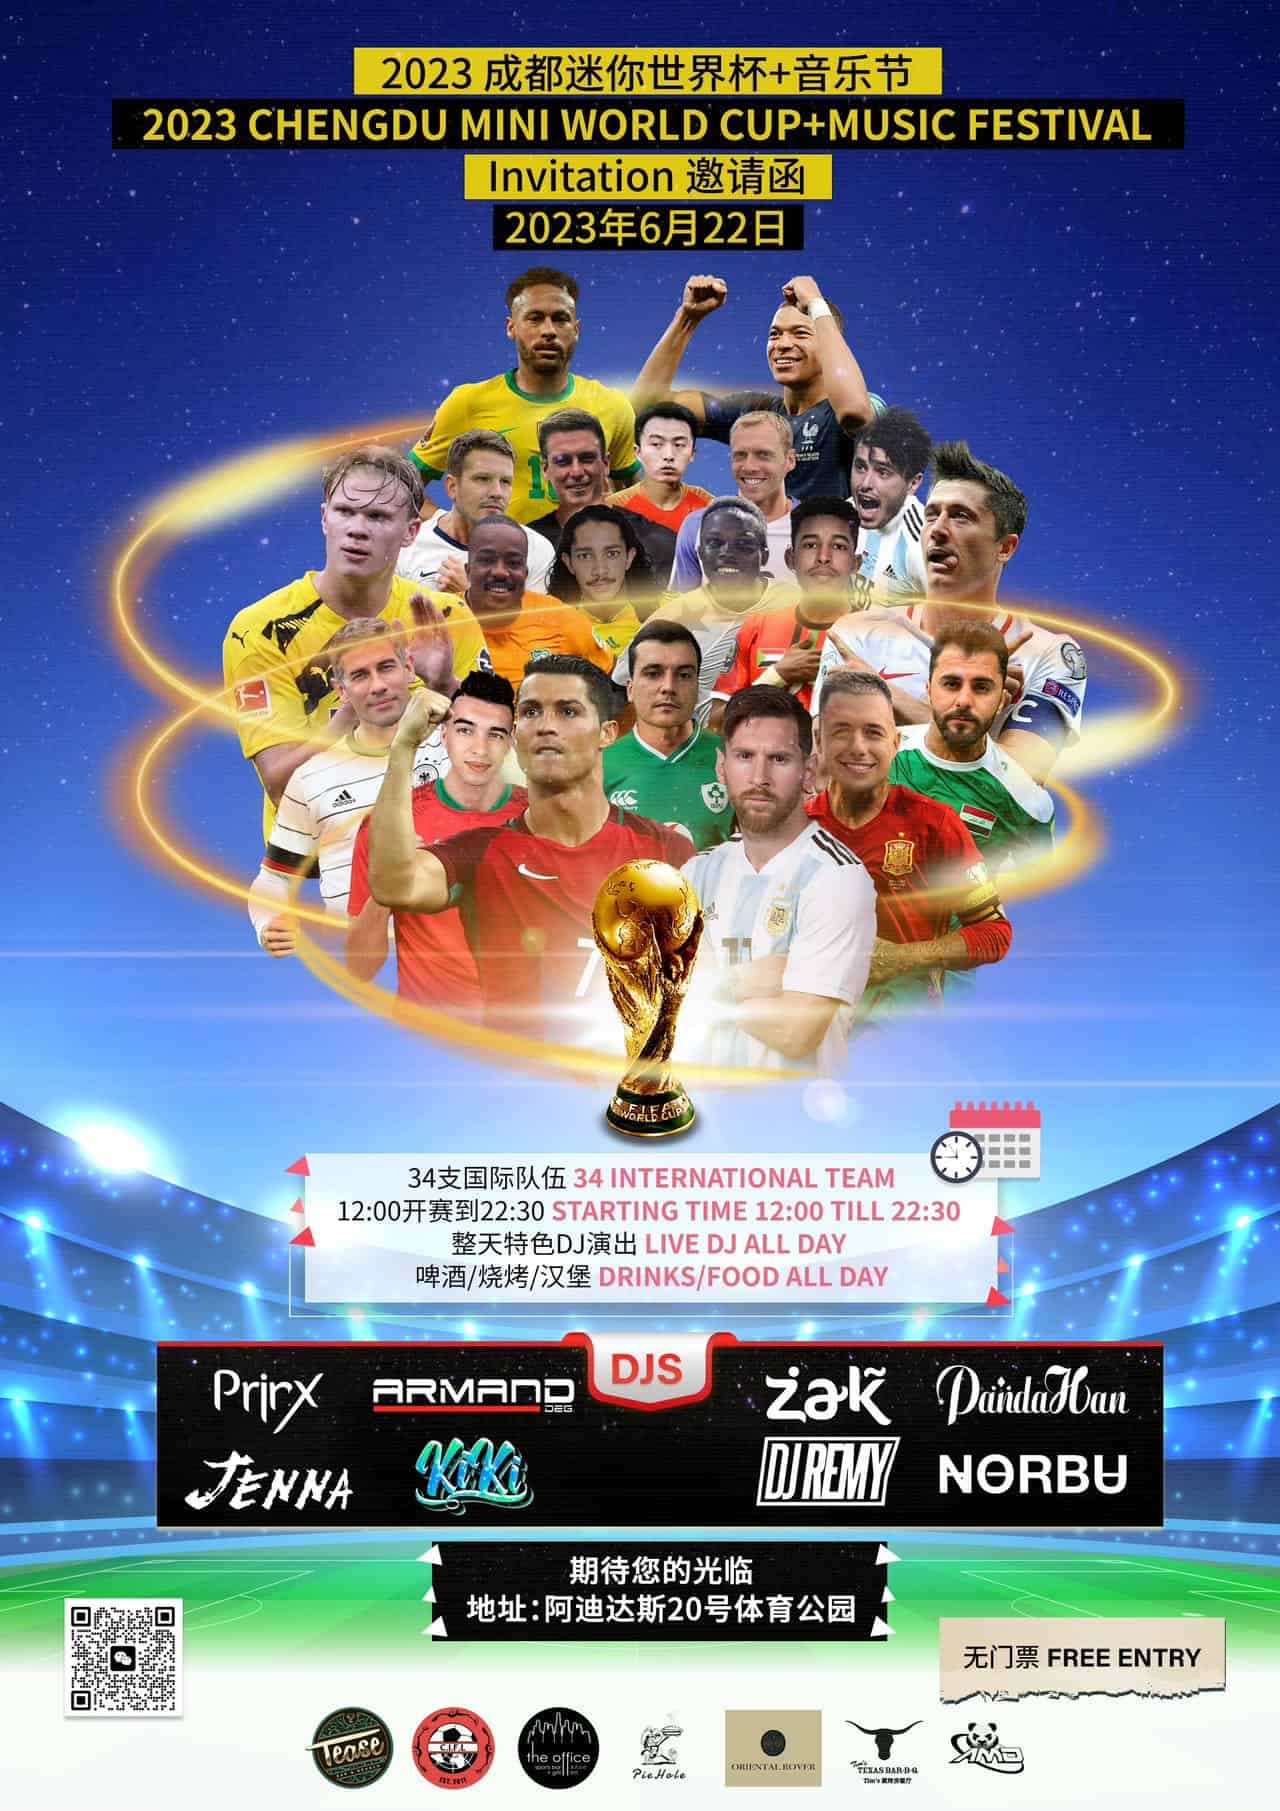 June 3: 2022 Chengdu Mini World Cup - Chengdu Expat